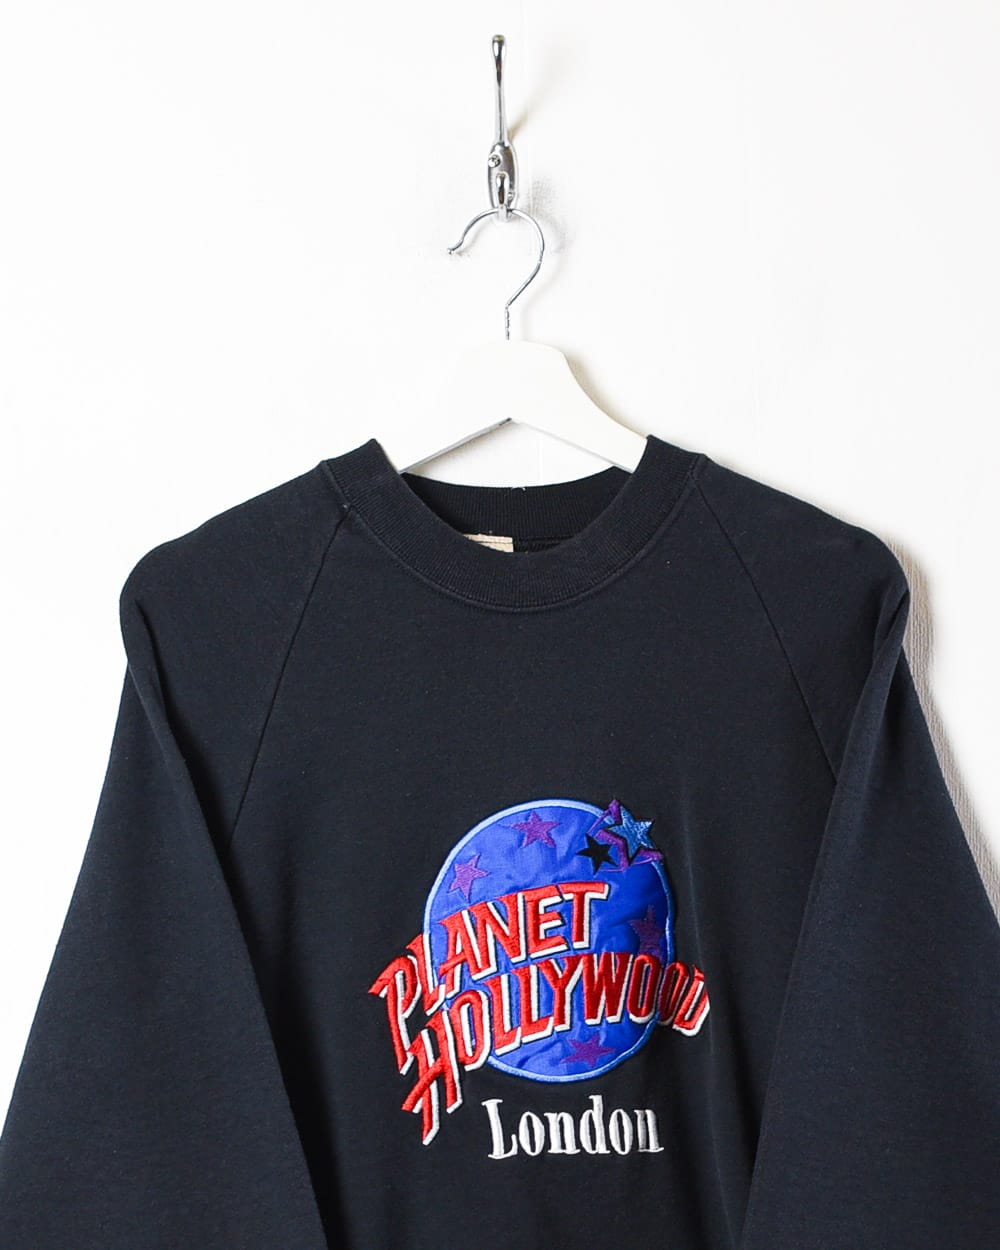 Black Planet Hollywood Sweatshirt - Large